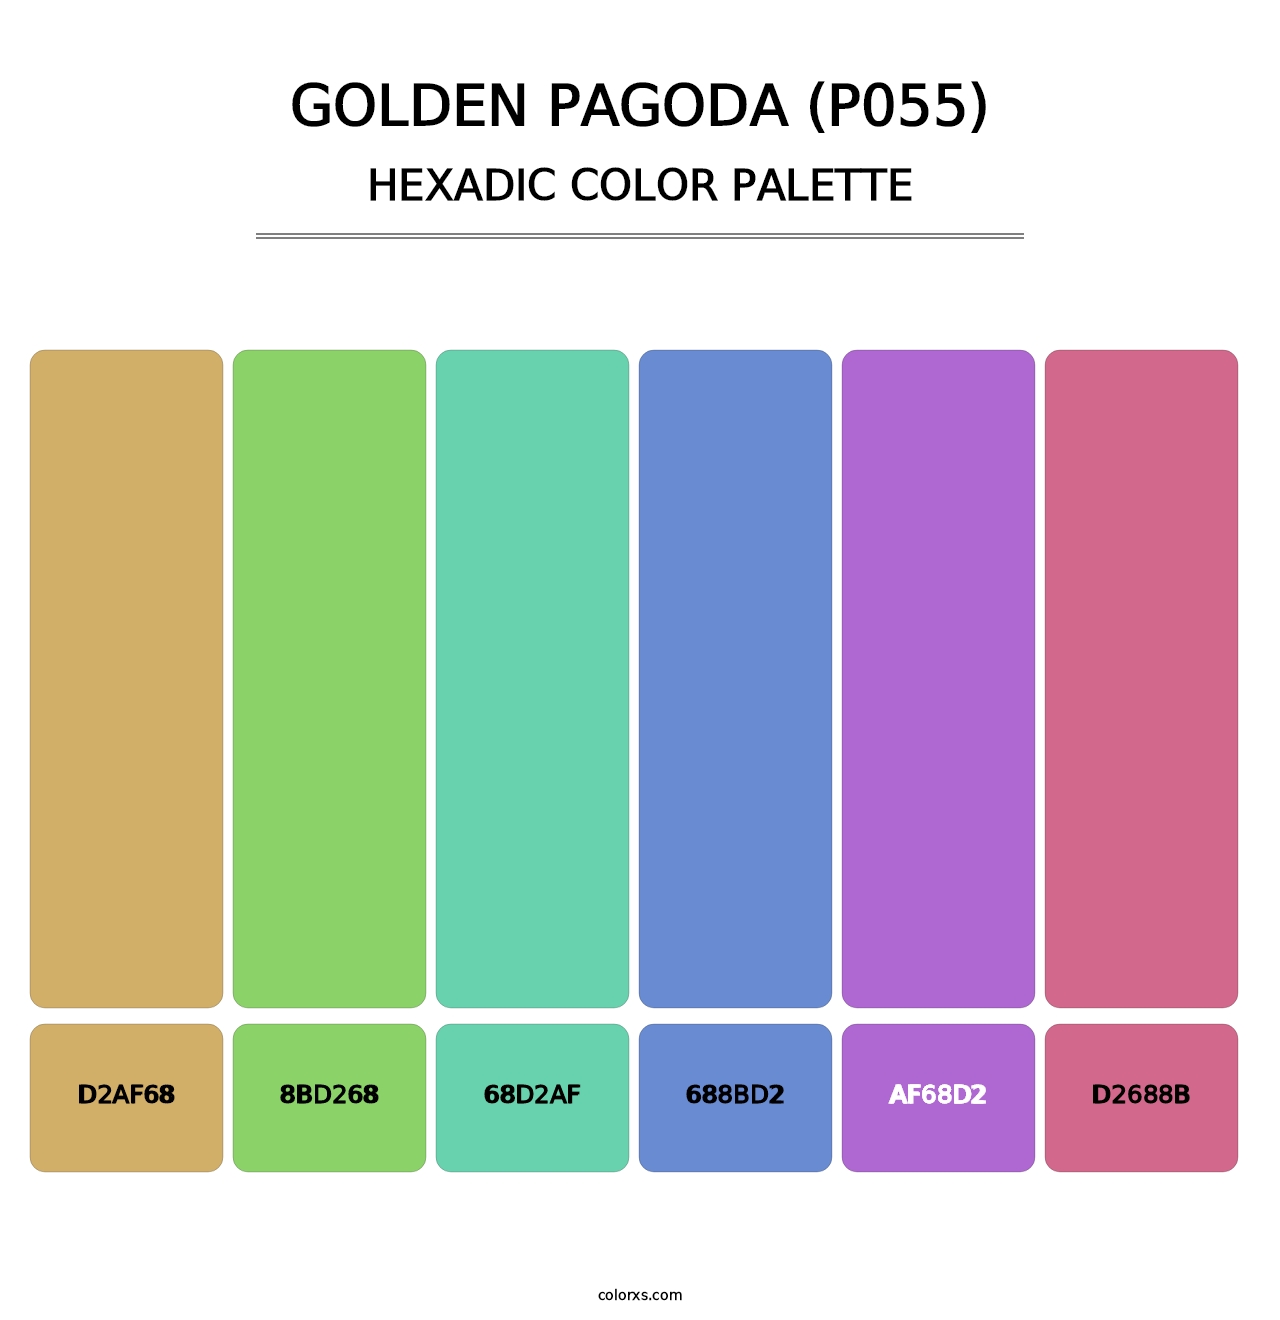 Golden Pagoda (P055) - Hexadic Color Palette